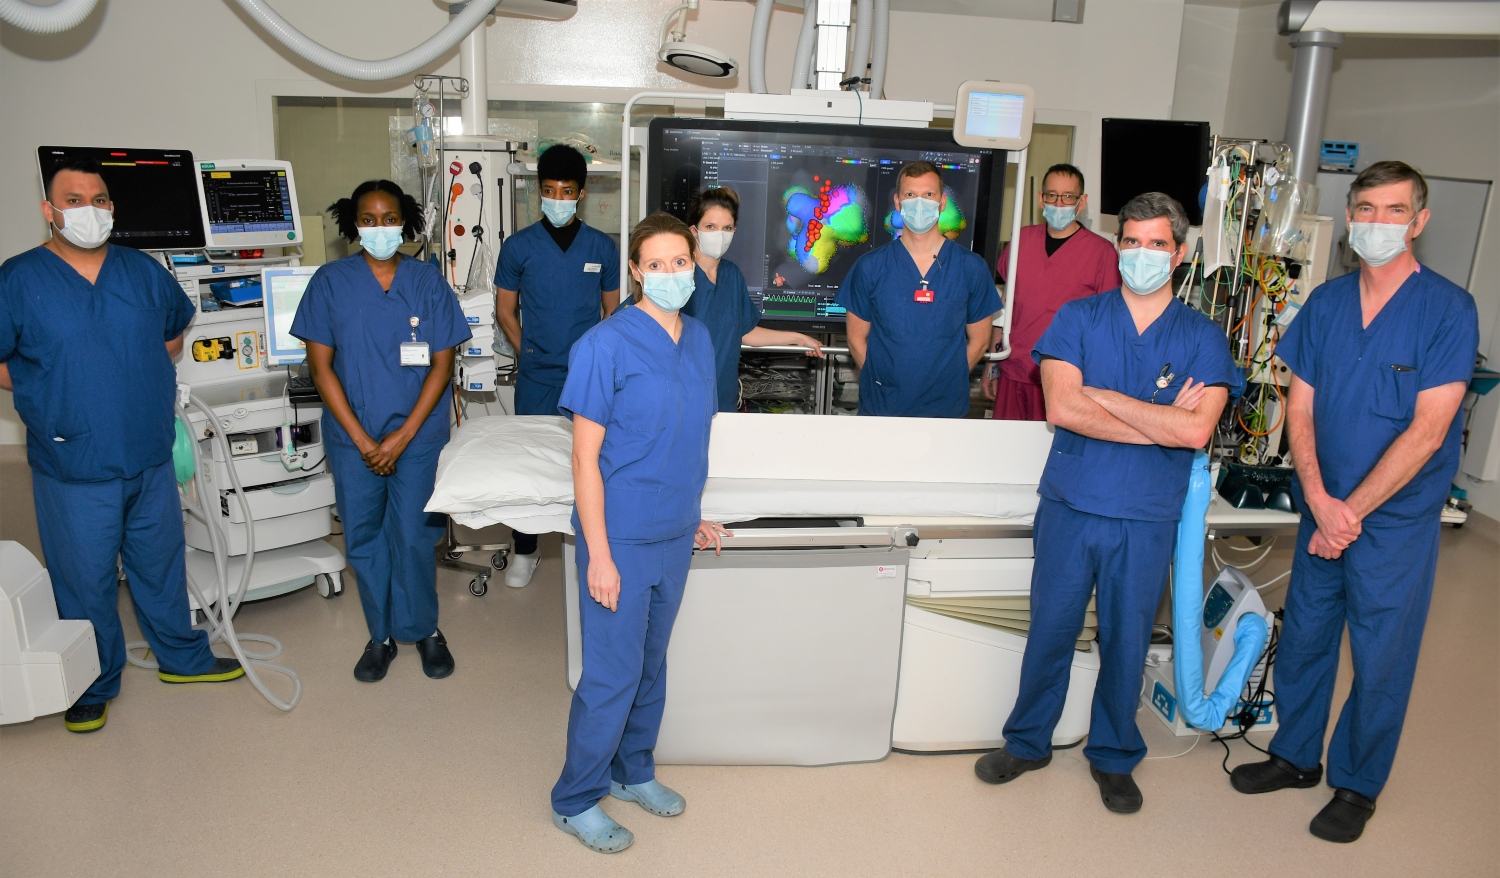 Nine people standing in blue scrubs in a hospital operating room.